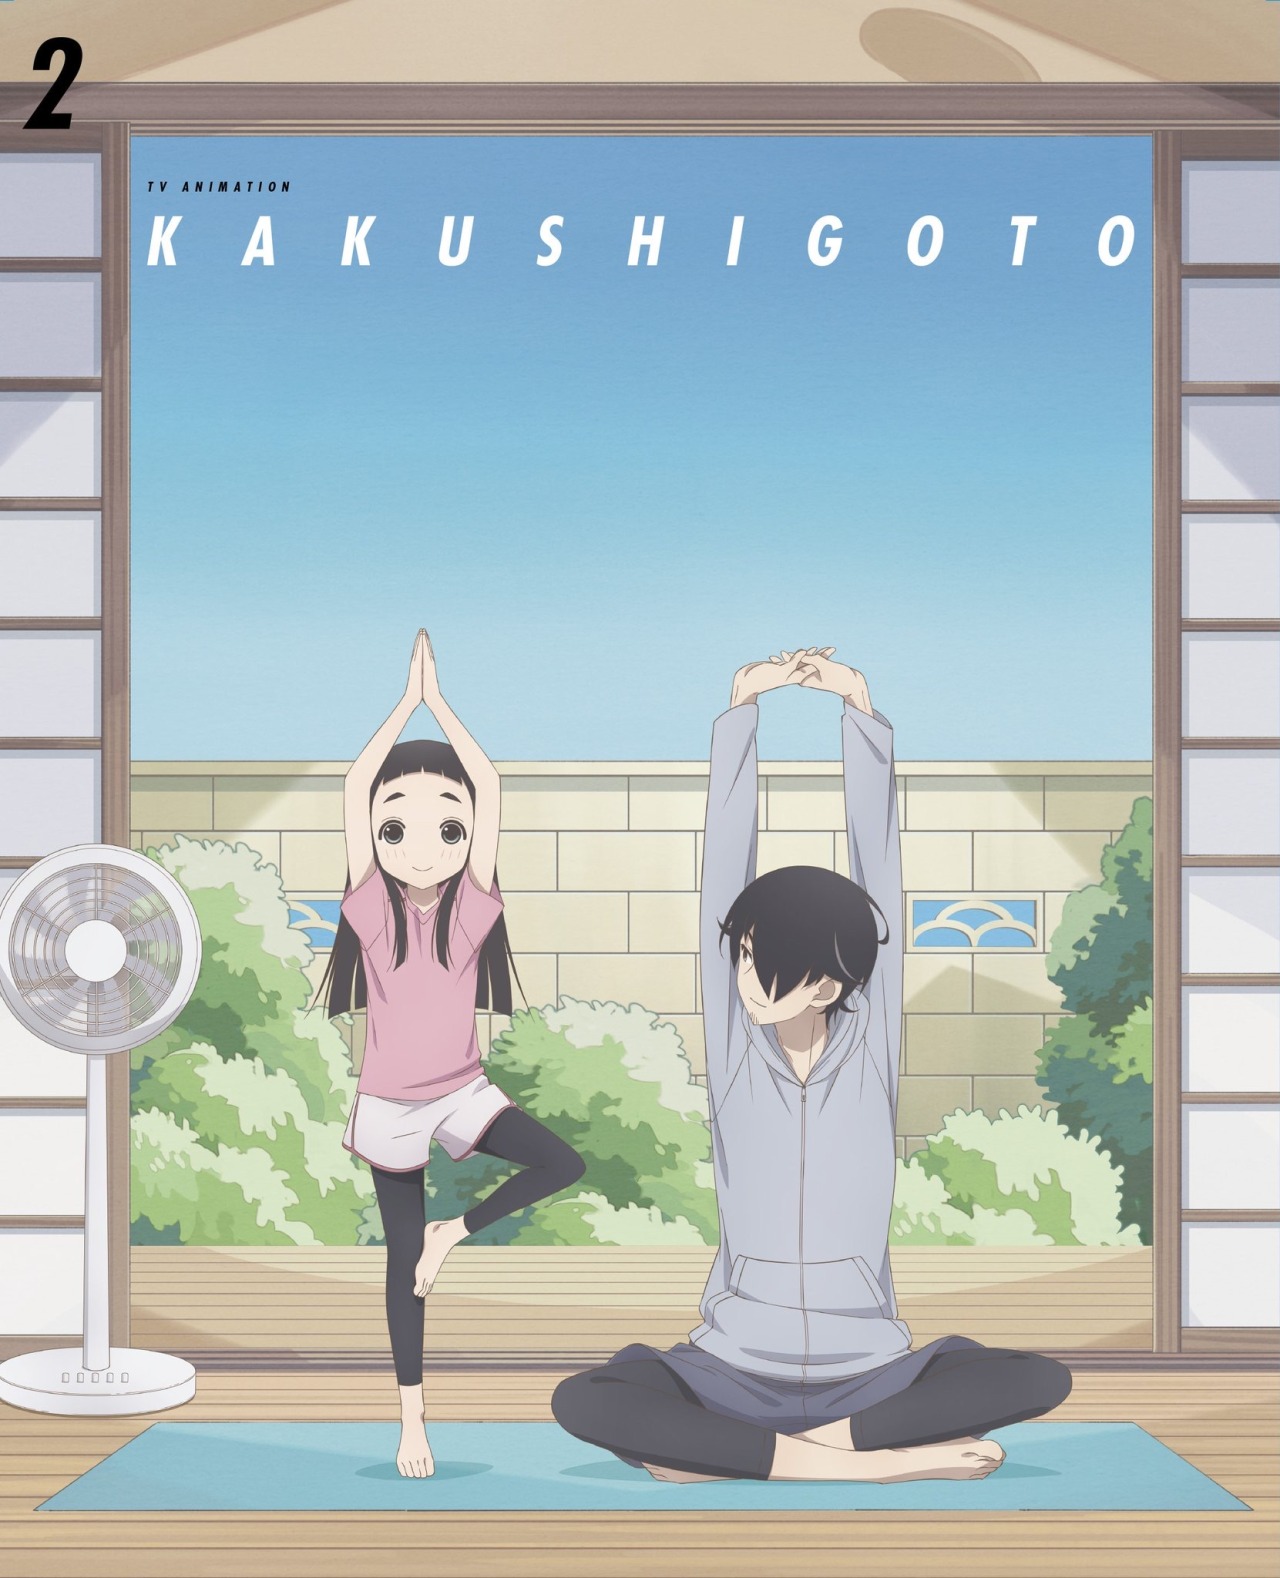 Kakushigoto Has Anime's Perfect Father-Daughter Relationship